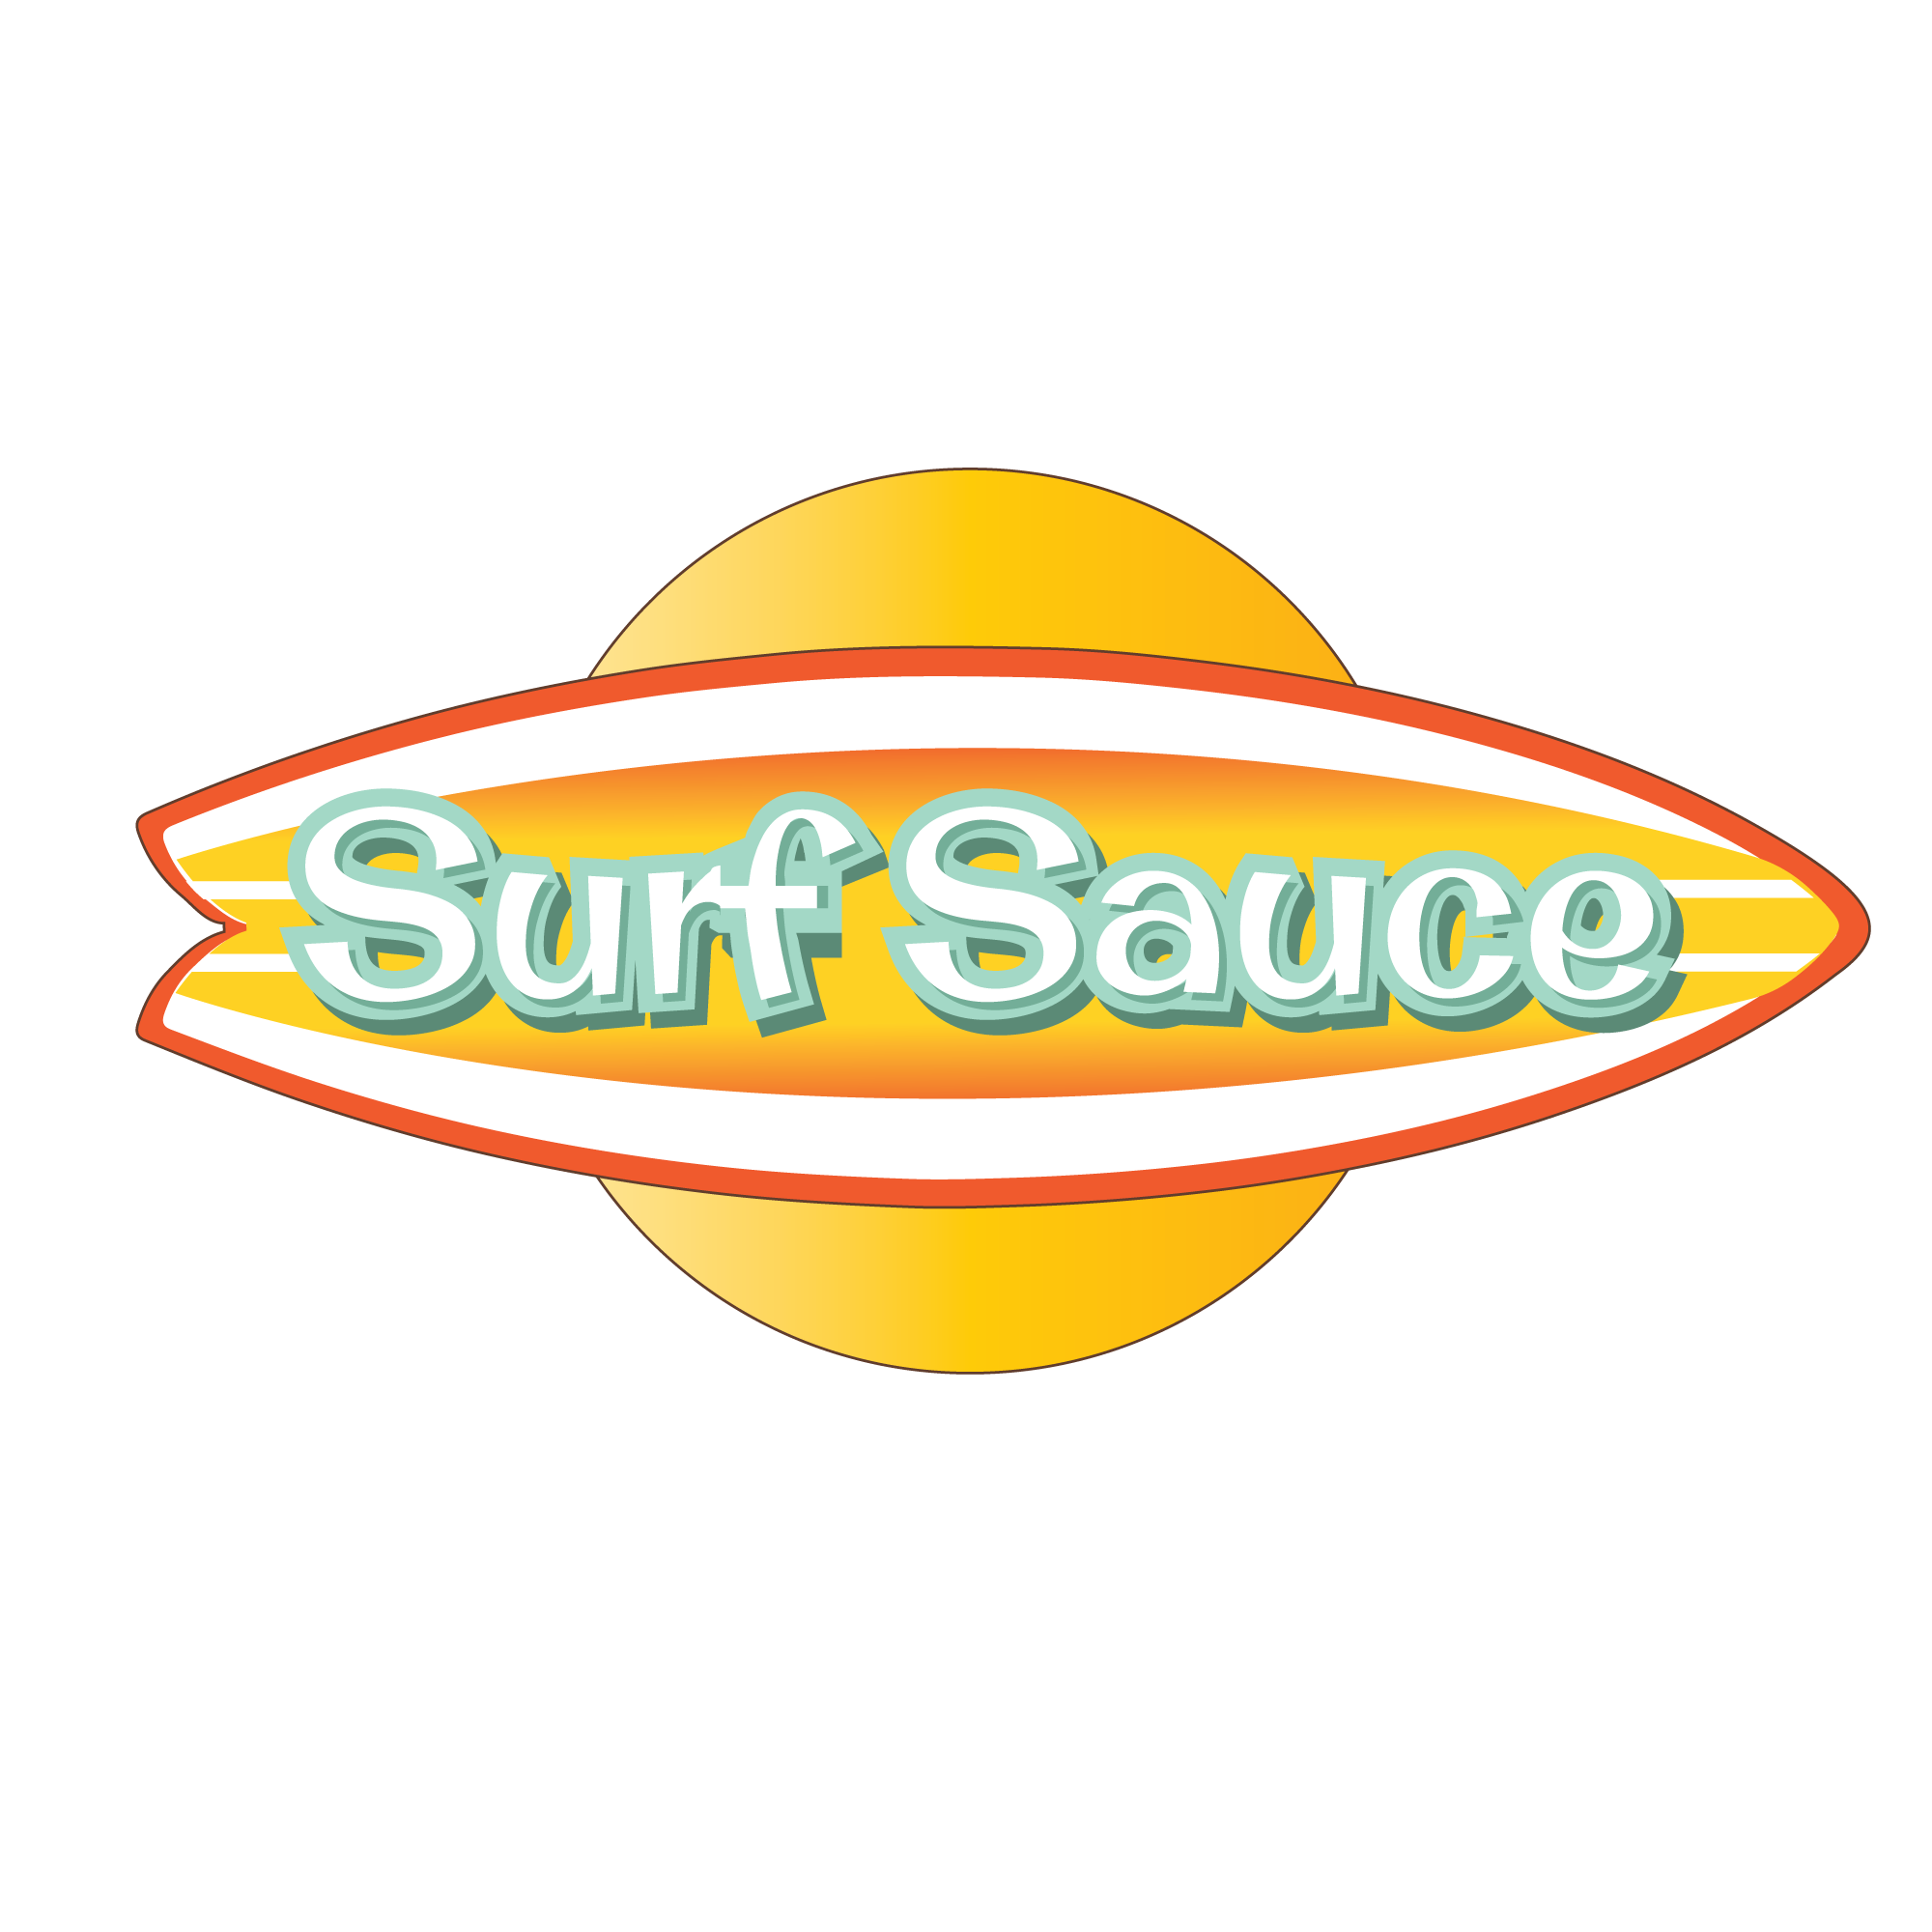 Surf Sauce